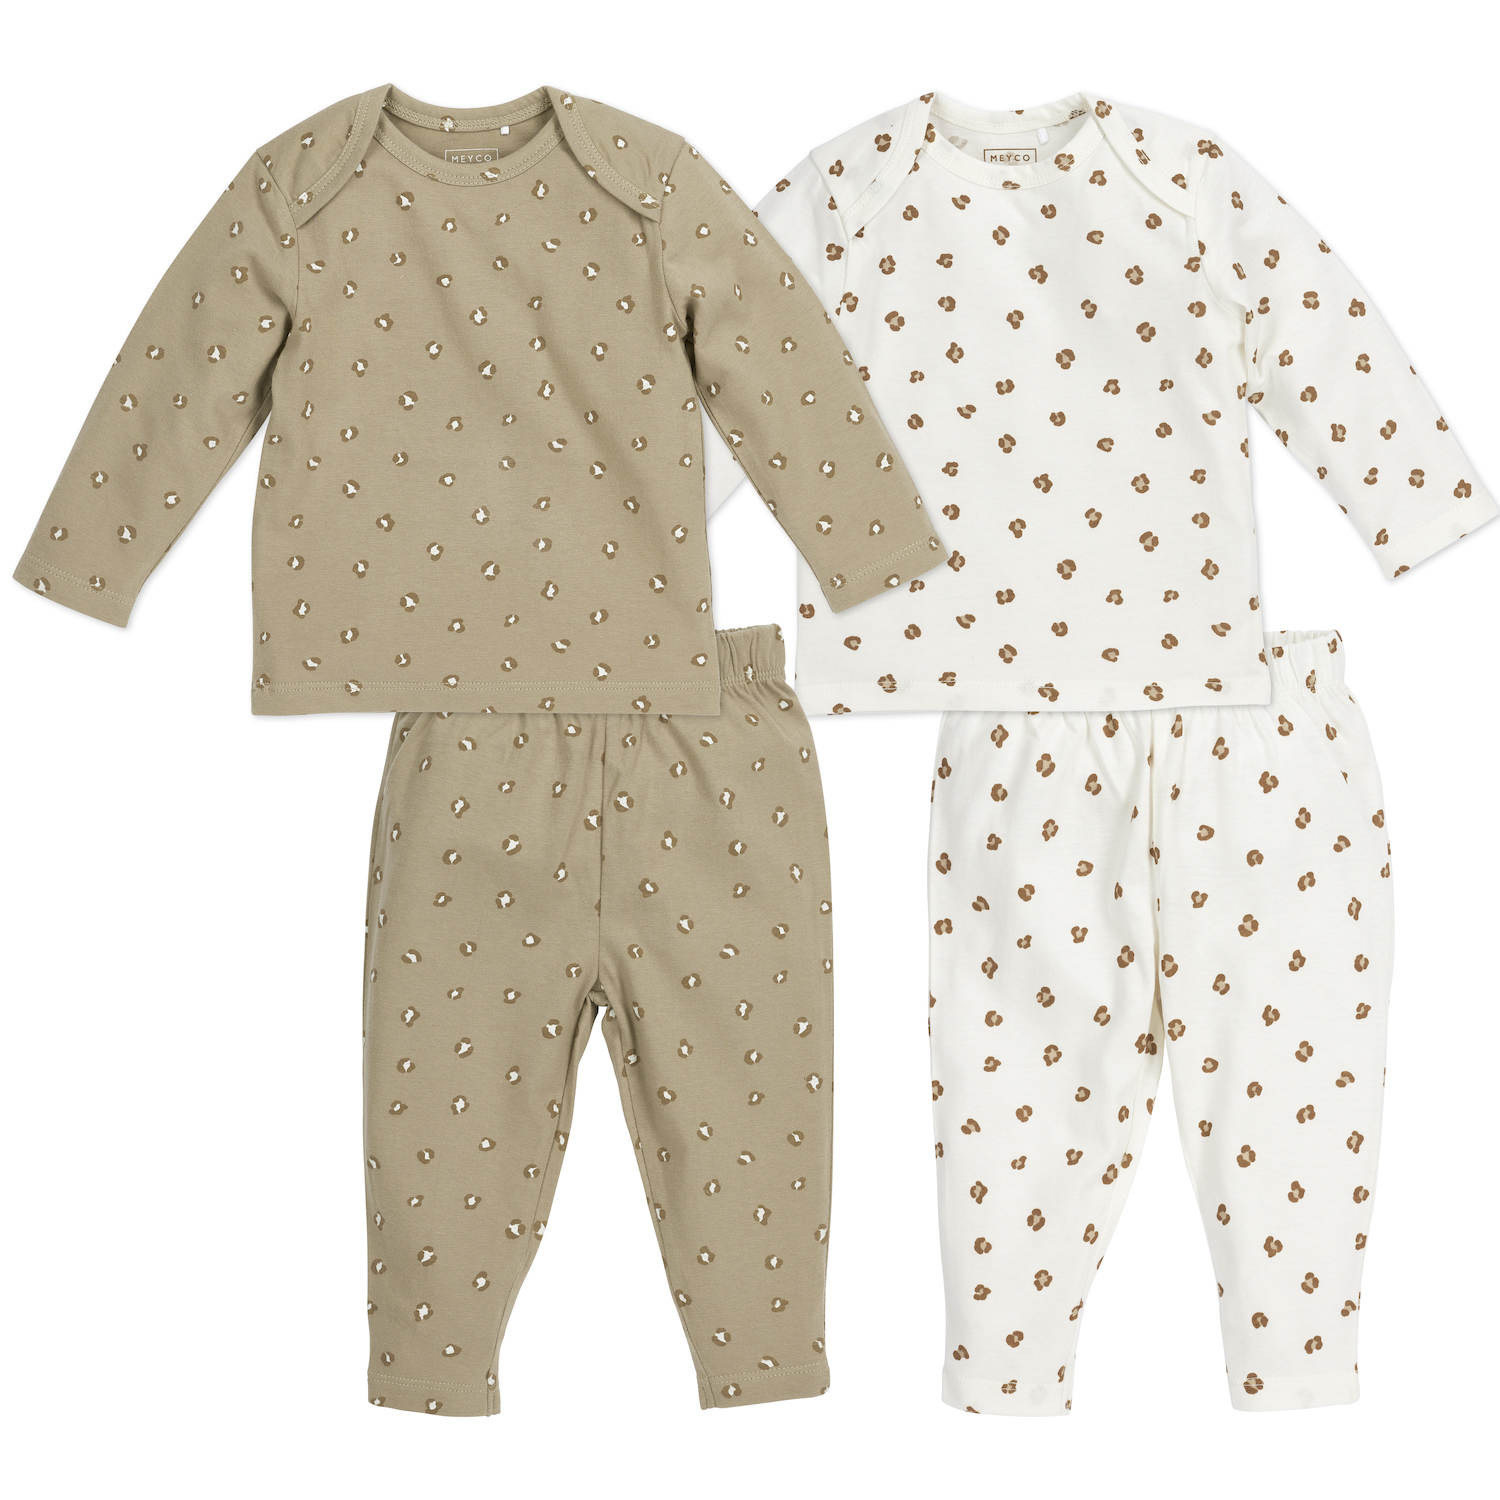 Baby pyjama 2-pack Mini Panther - Offwhite/Sand - Größe 50/56